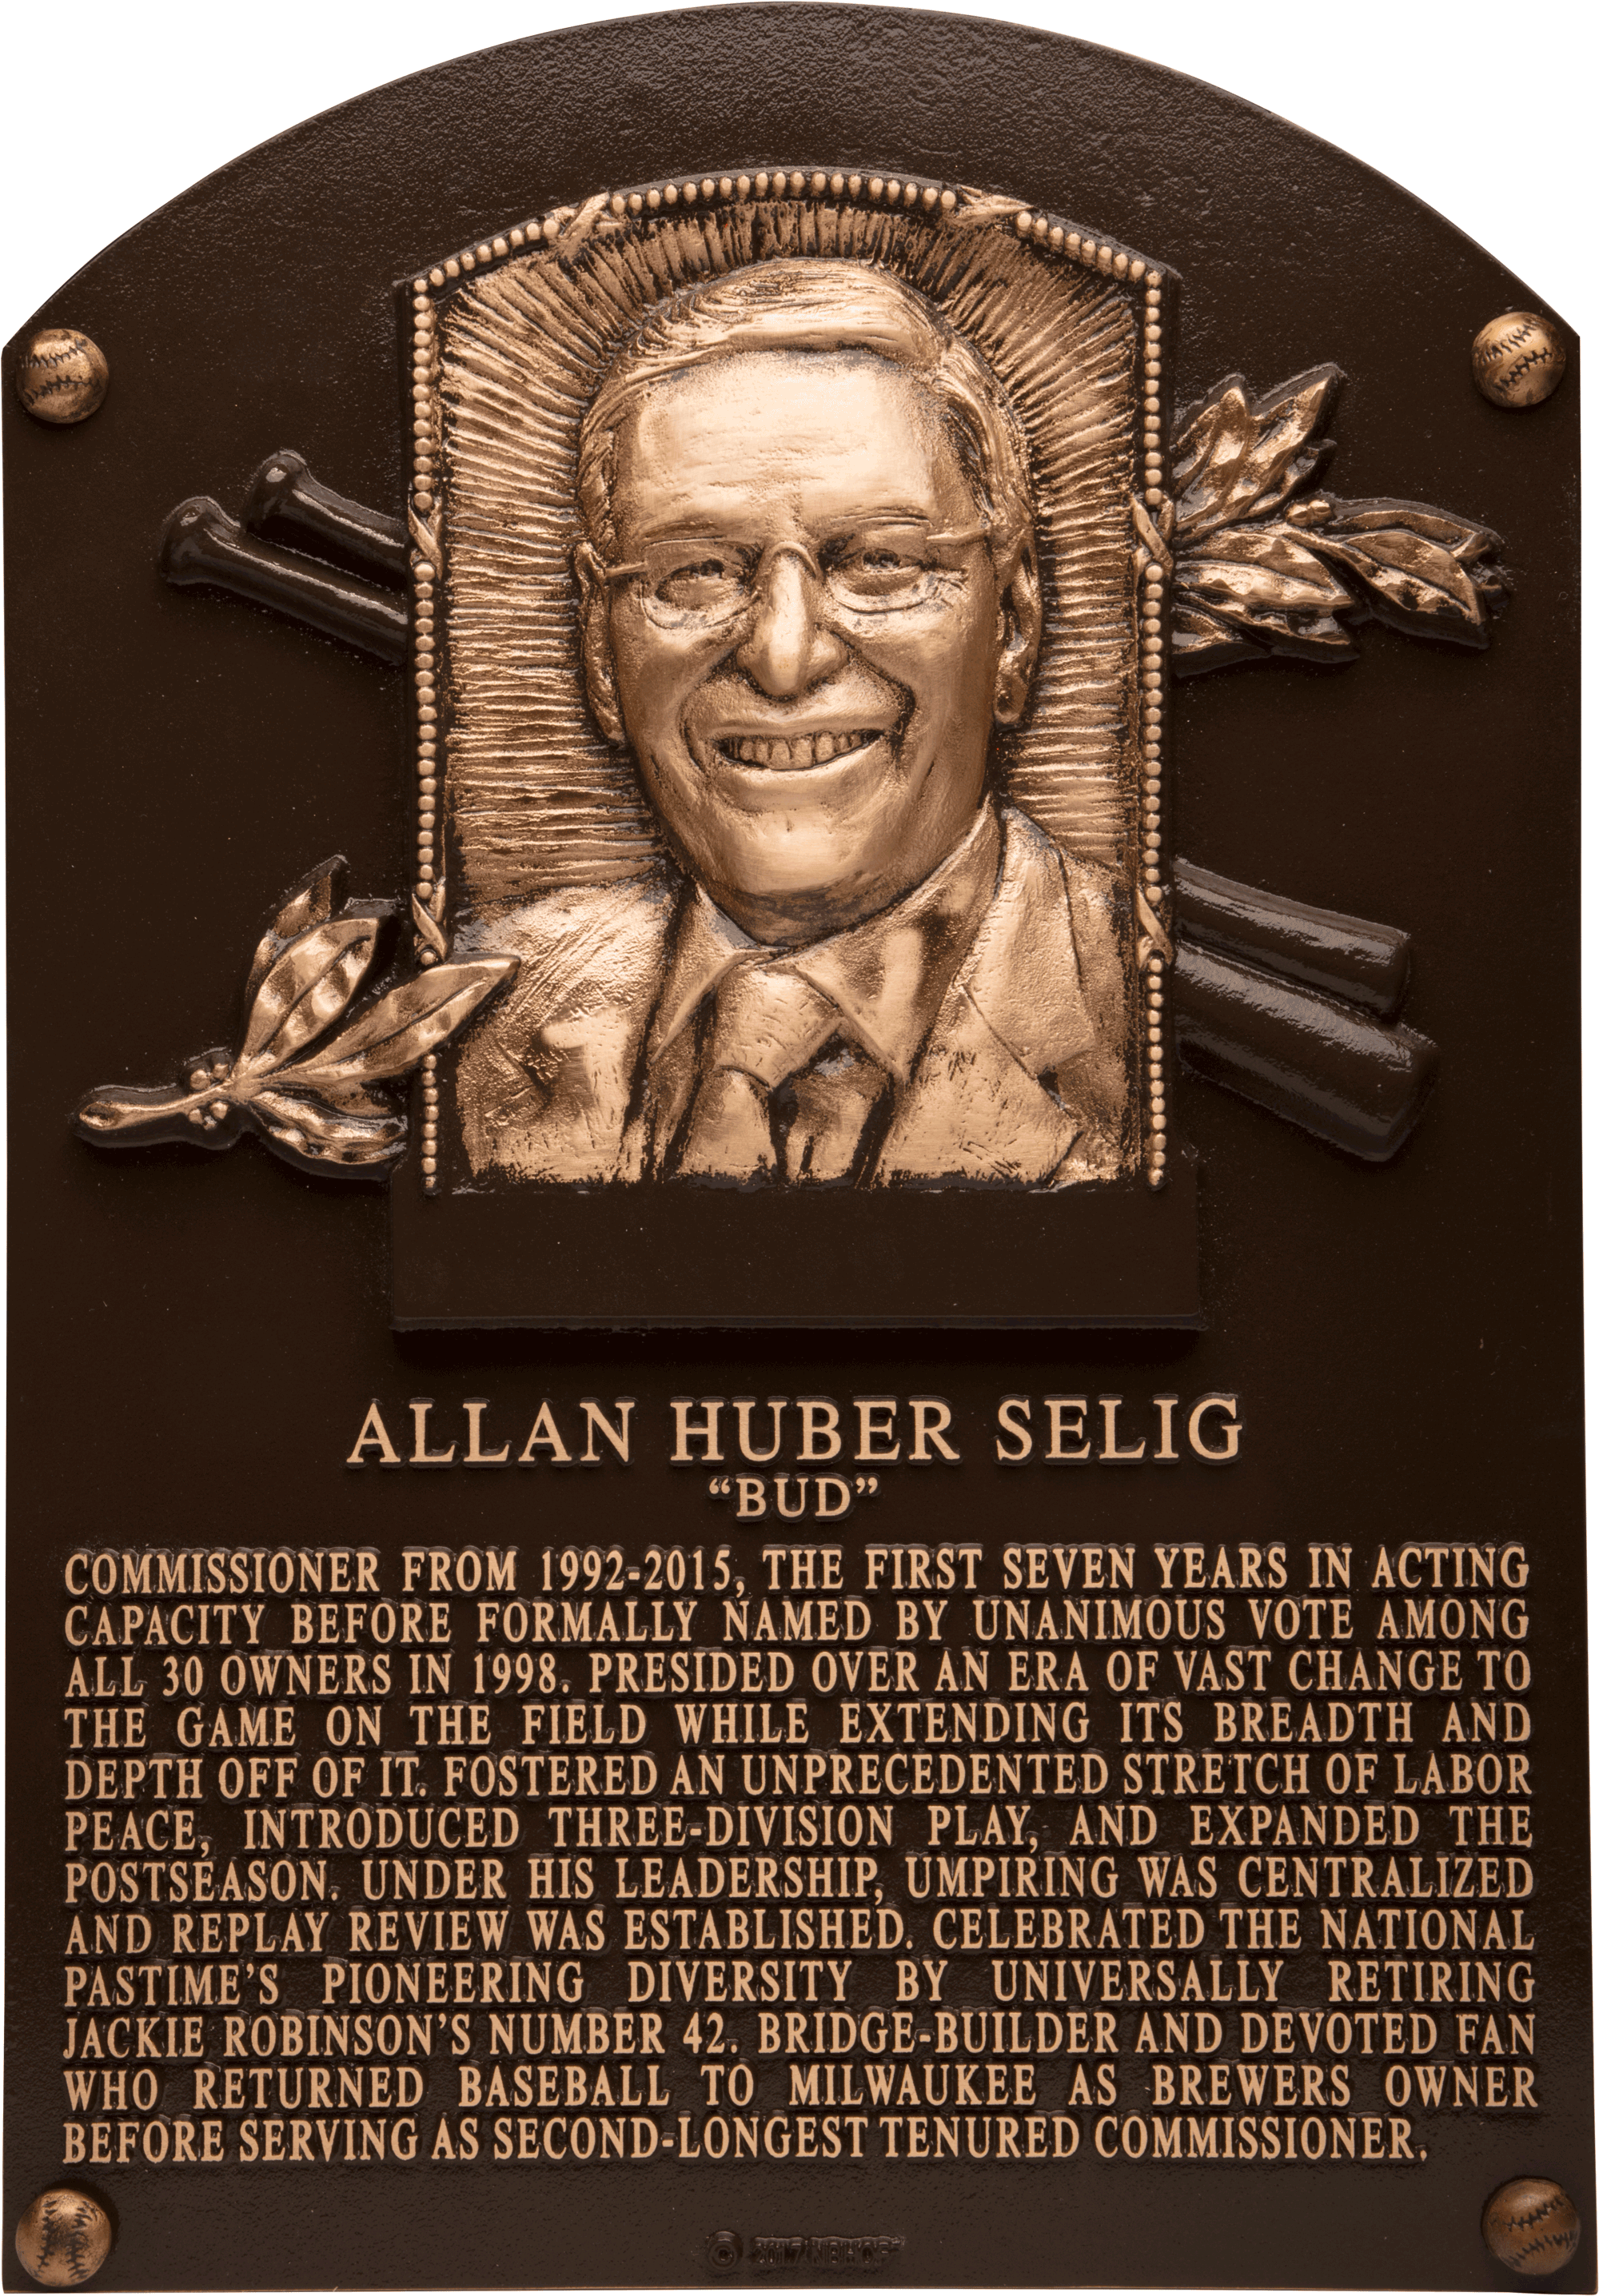 Bud Selig Hall of Fame plaque